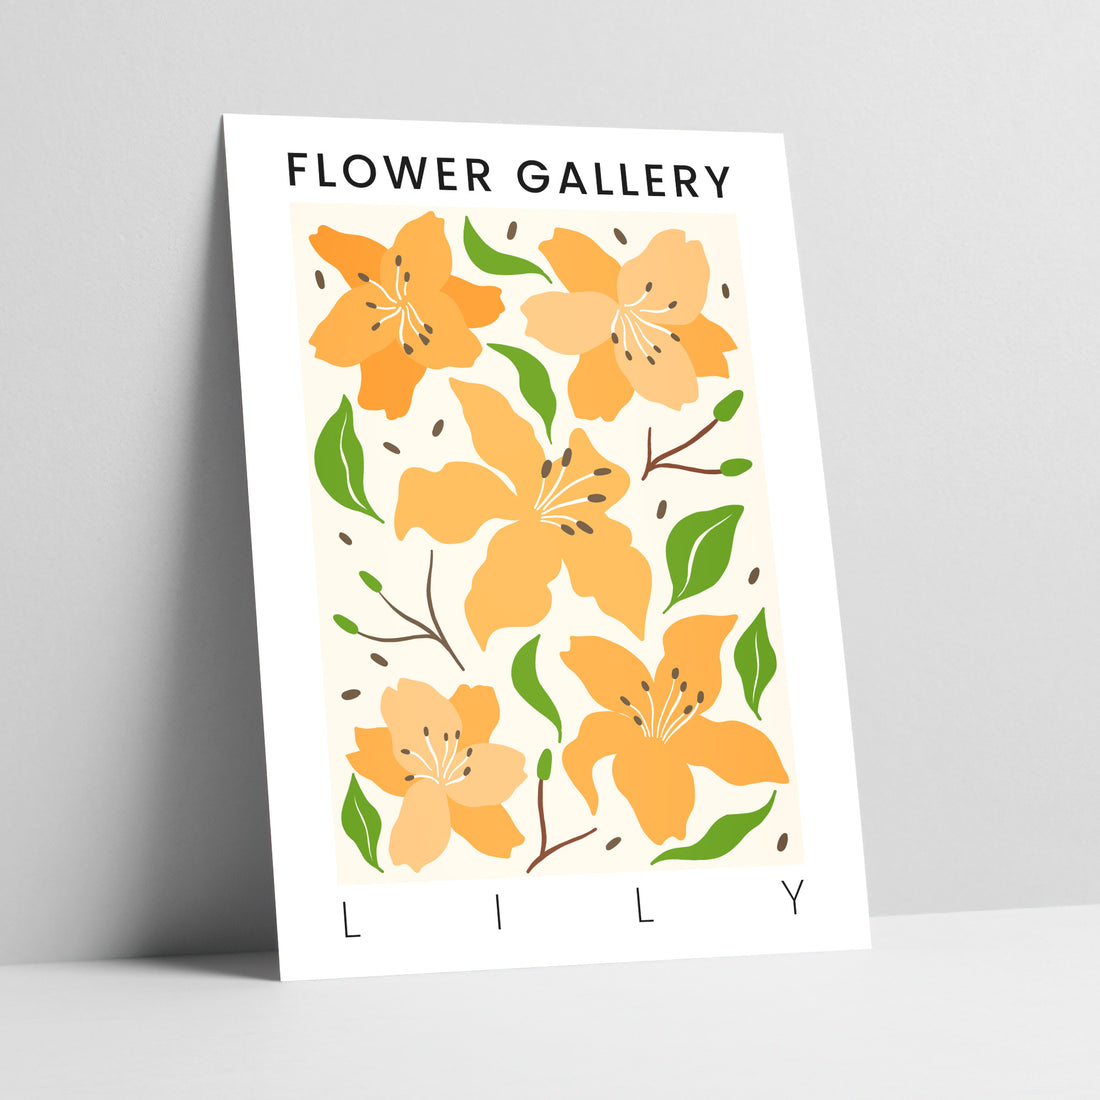 Flower Gallery: Lily Art Print